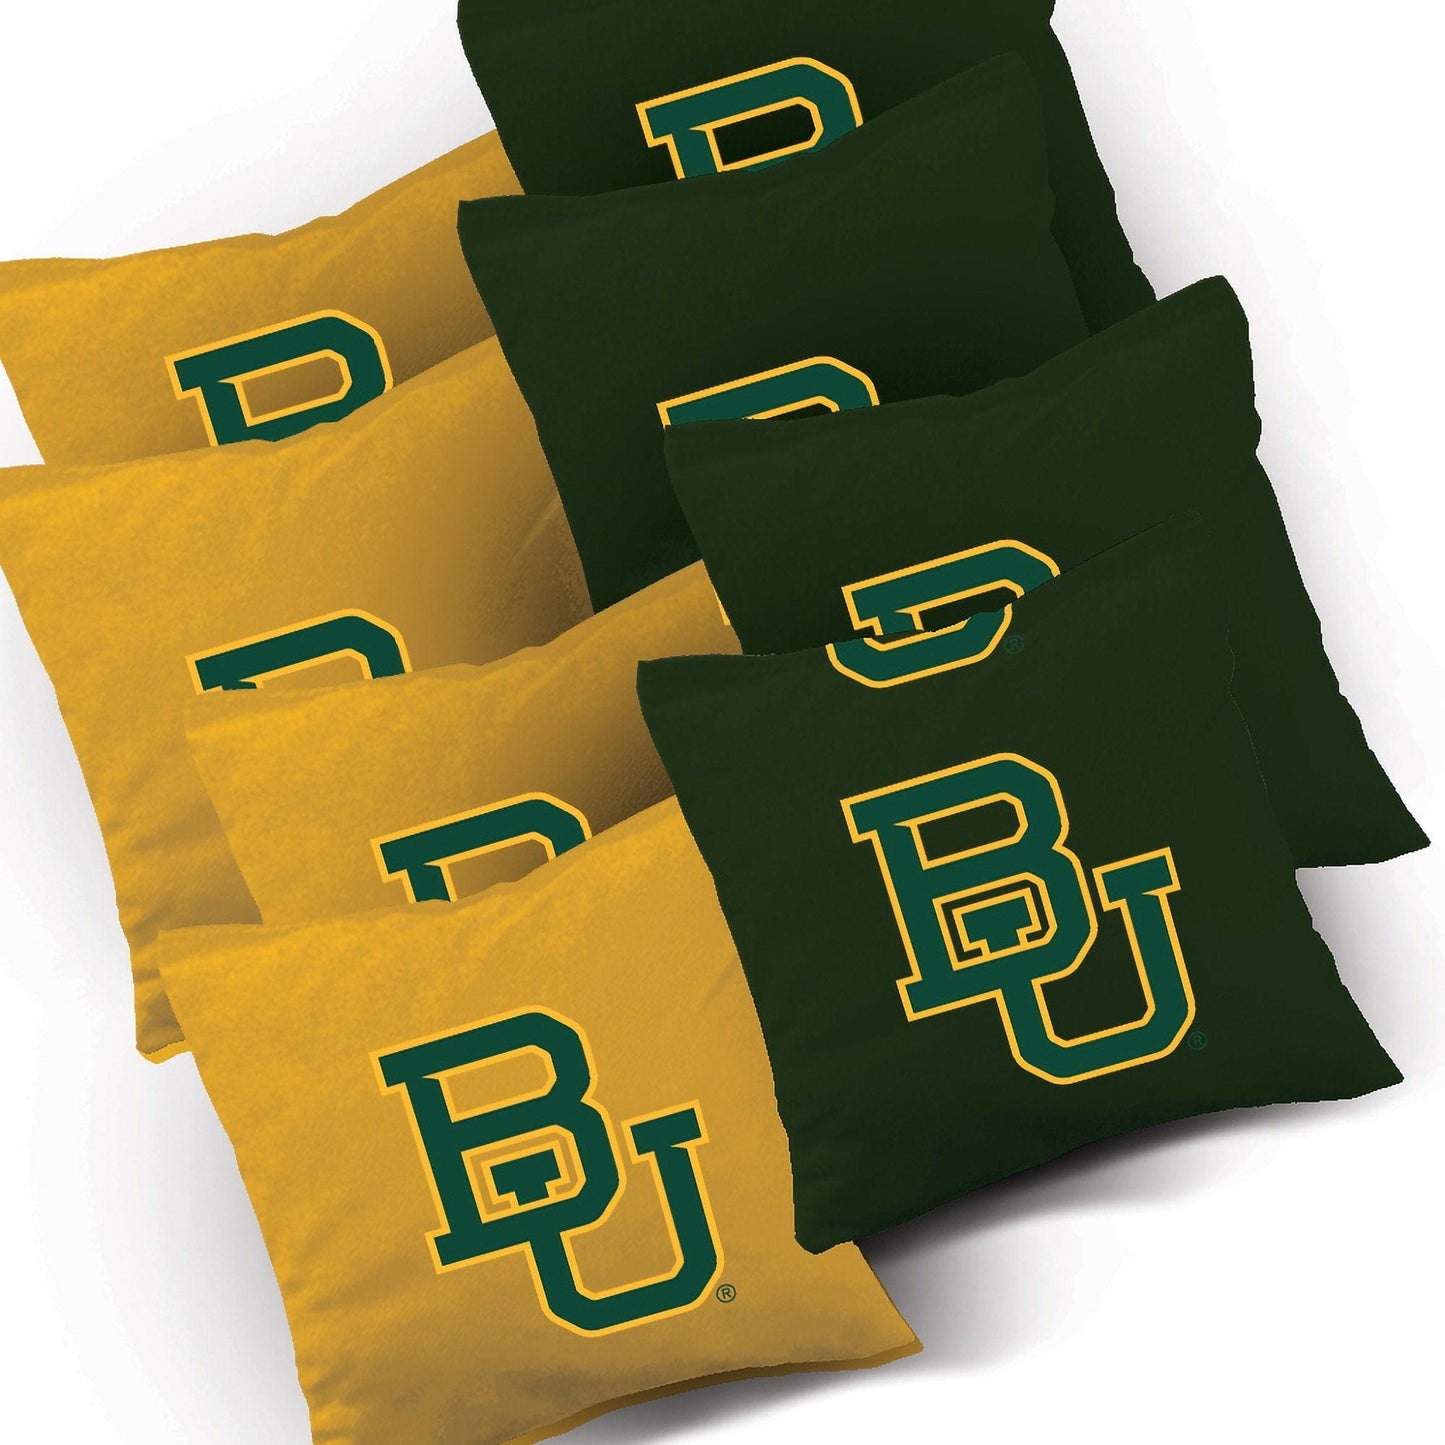 Baylor Bears Striped team logo bags